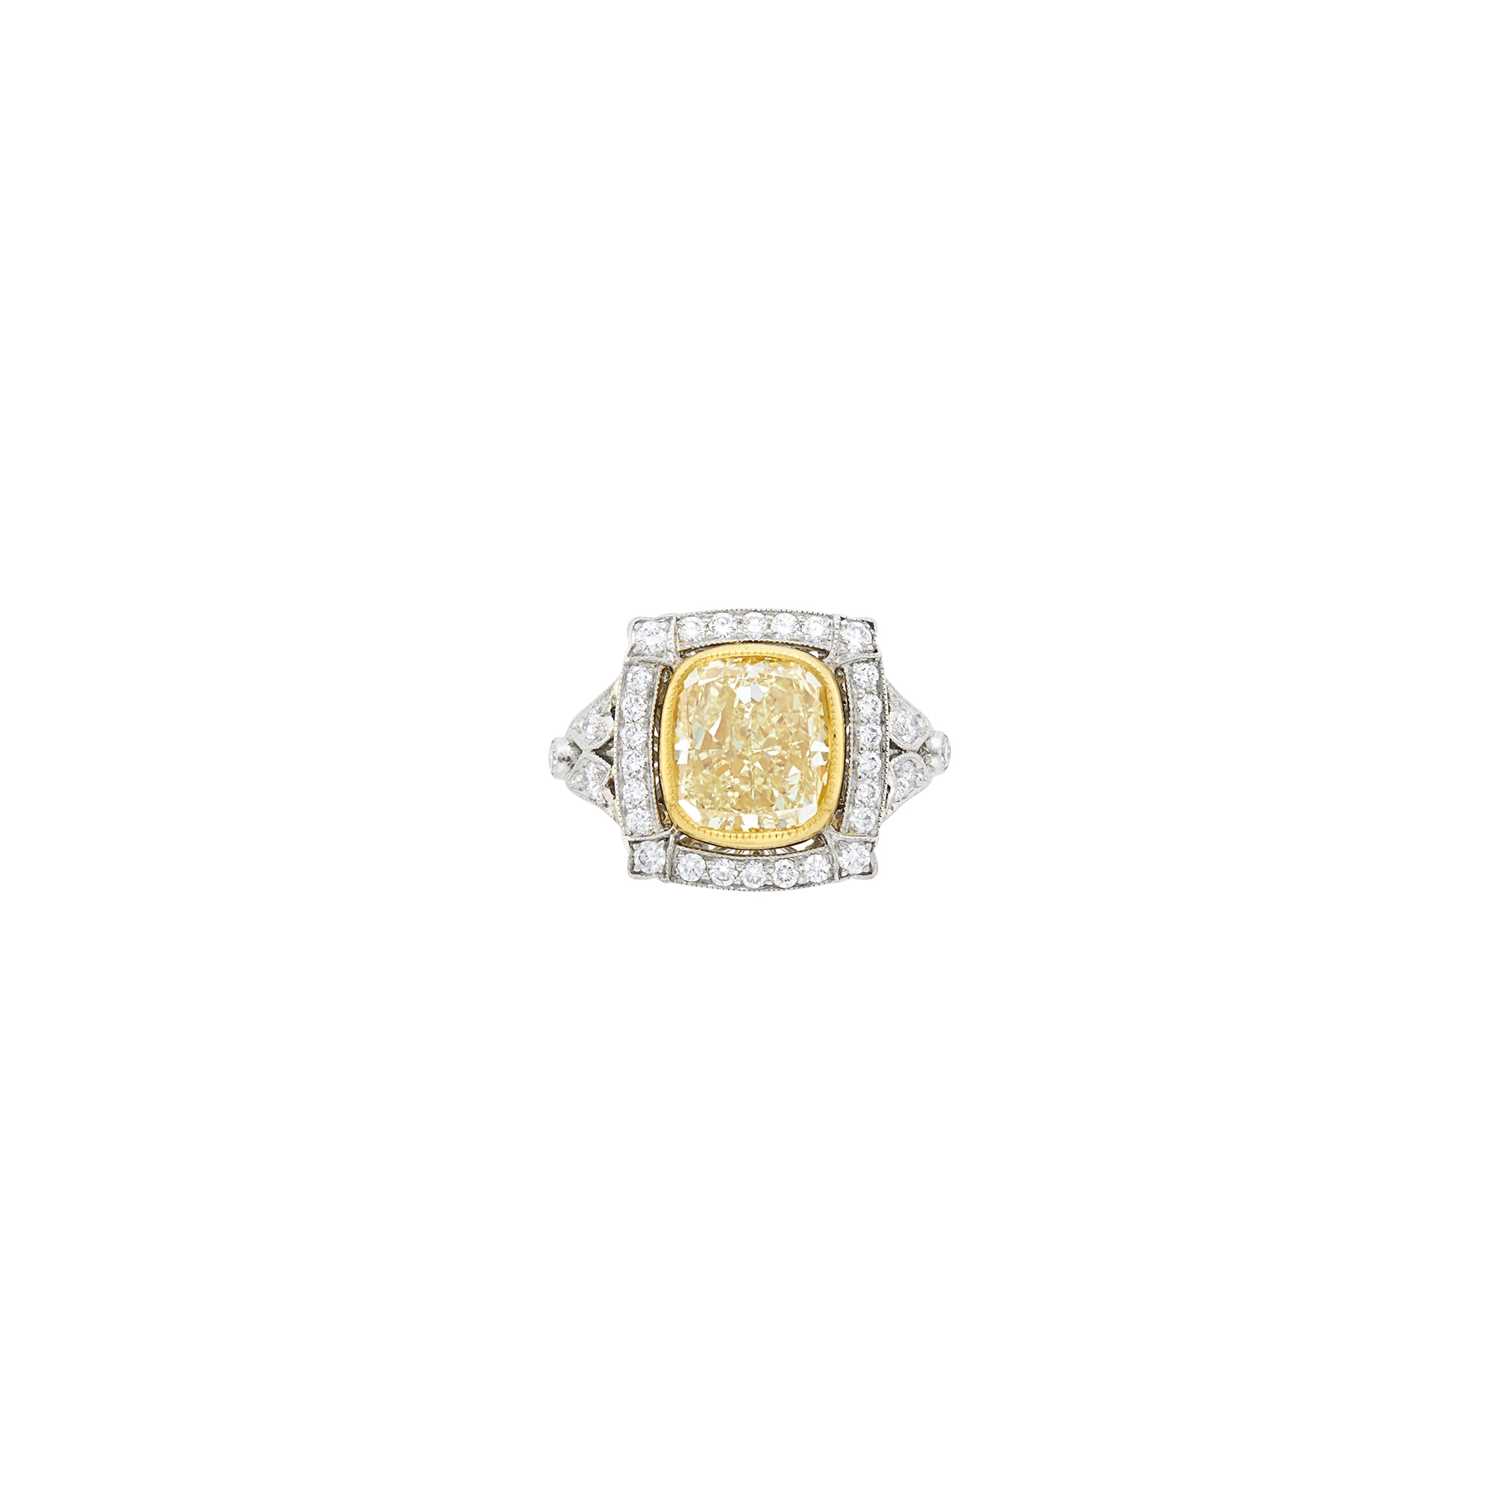 Lot 1148 - Sophia D. Platinum, Gold, Colored Diamond and Diamond Ring